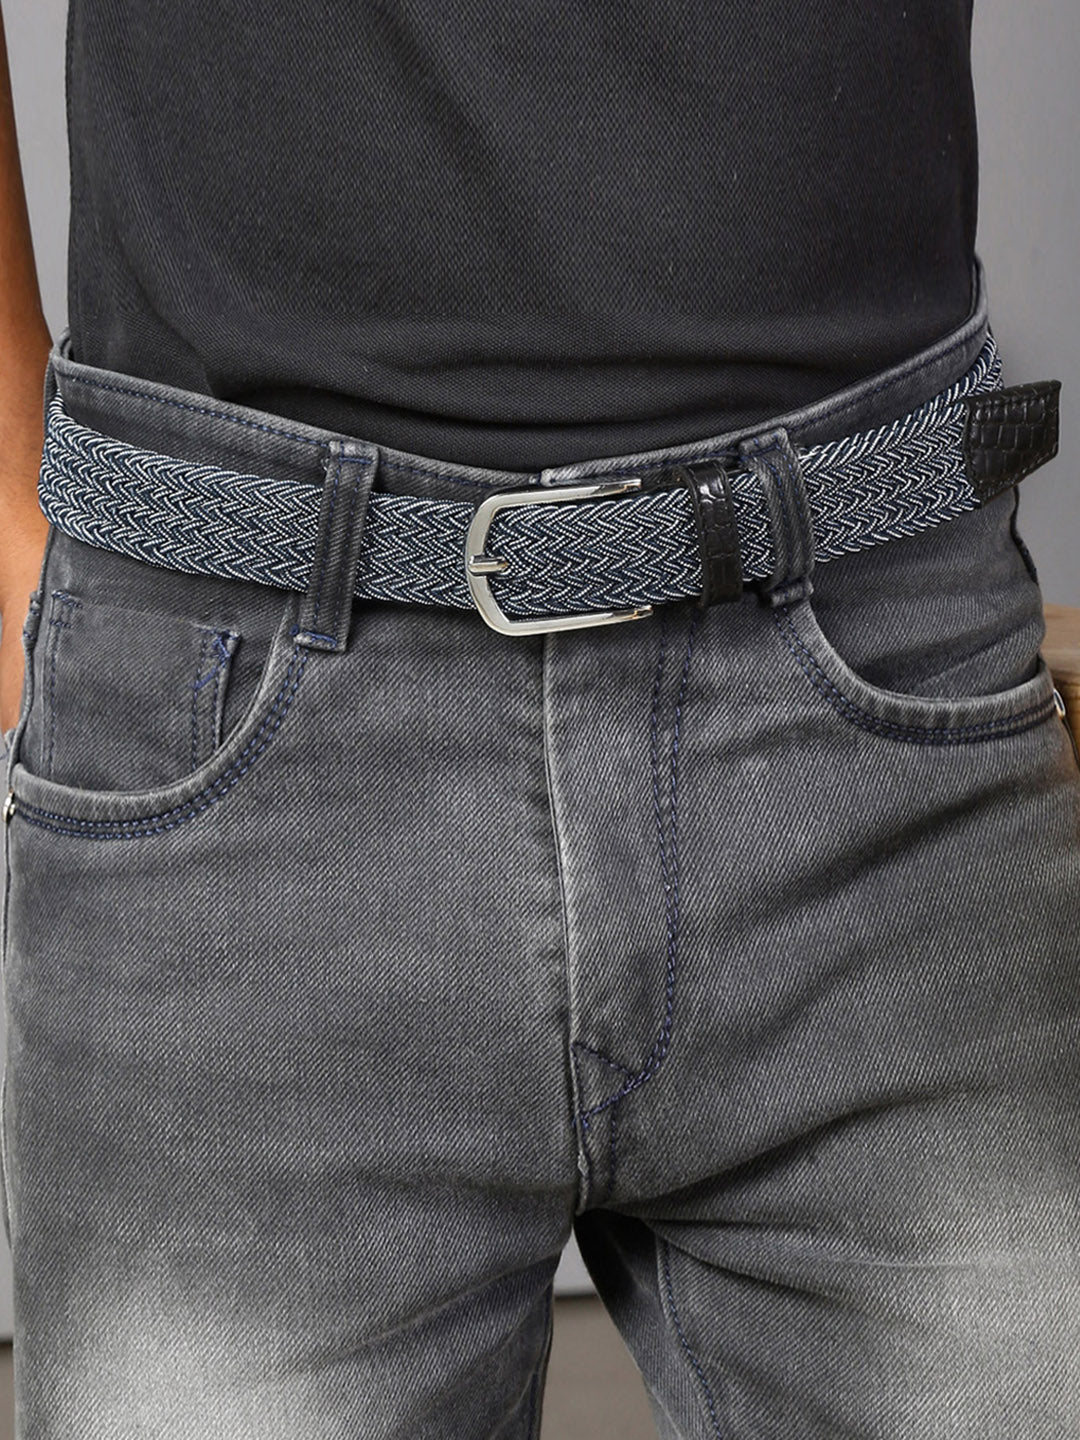 Buy Men's Braided Elastic Stretch Belt - LOUIS STITCH